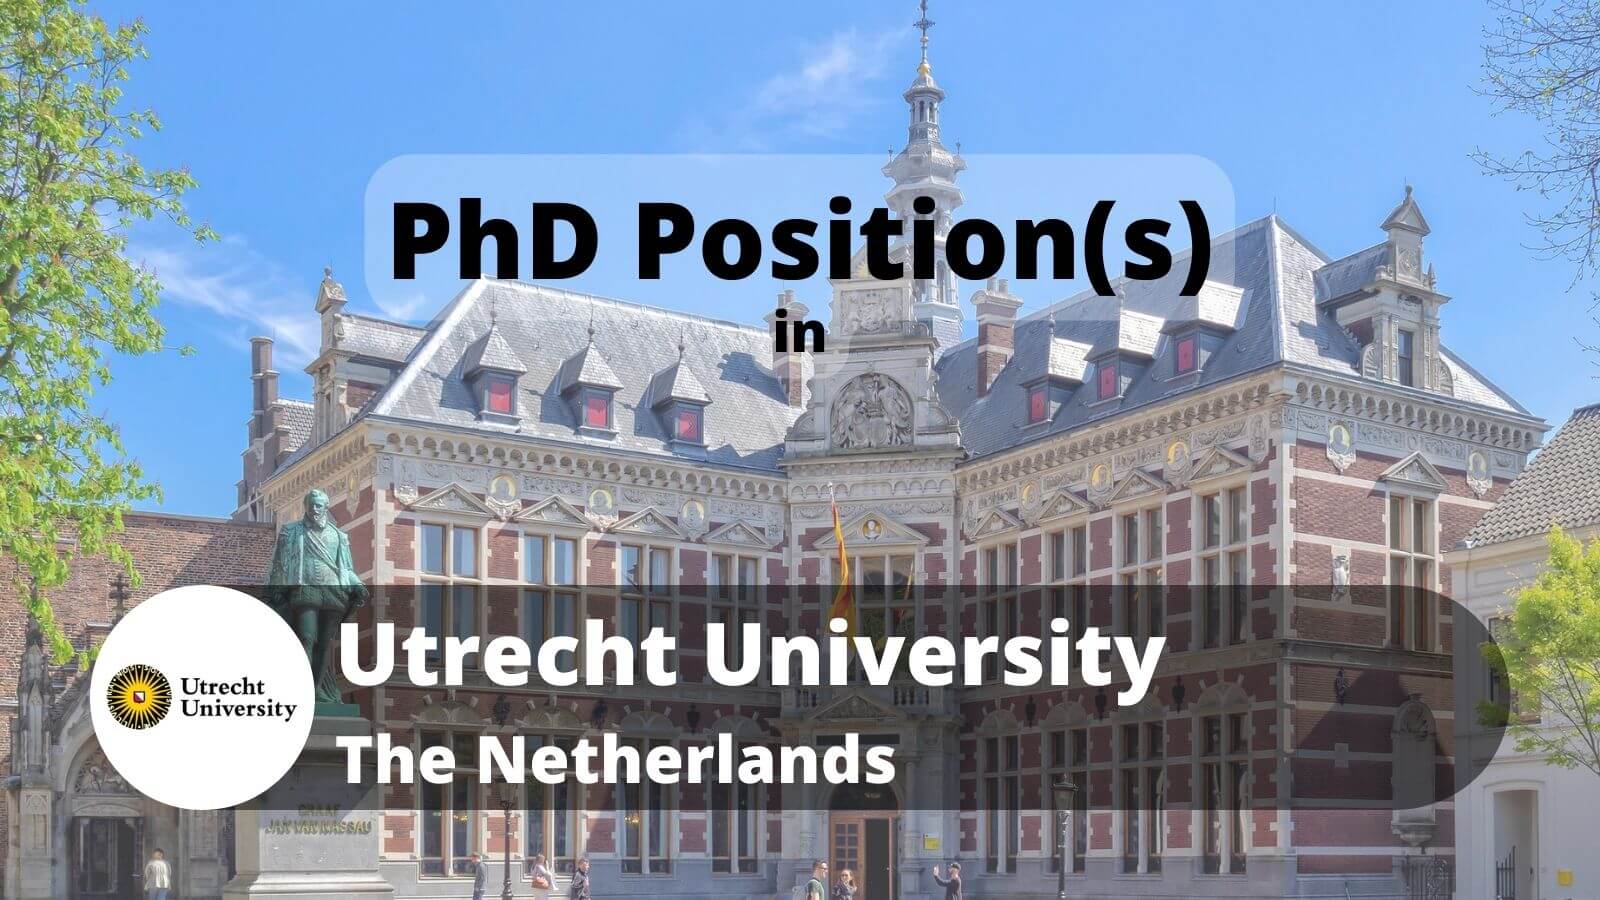 PhD Positions in Utrecht University UU, The Netherlands